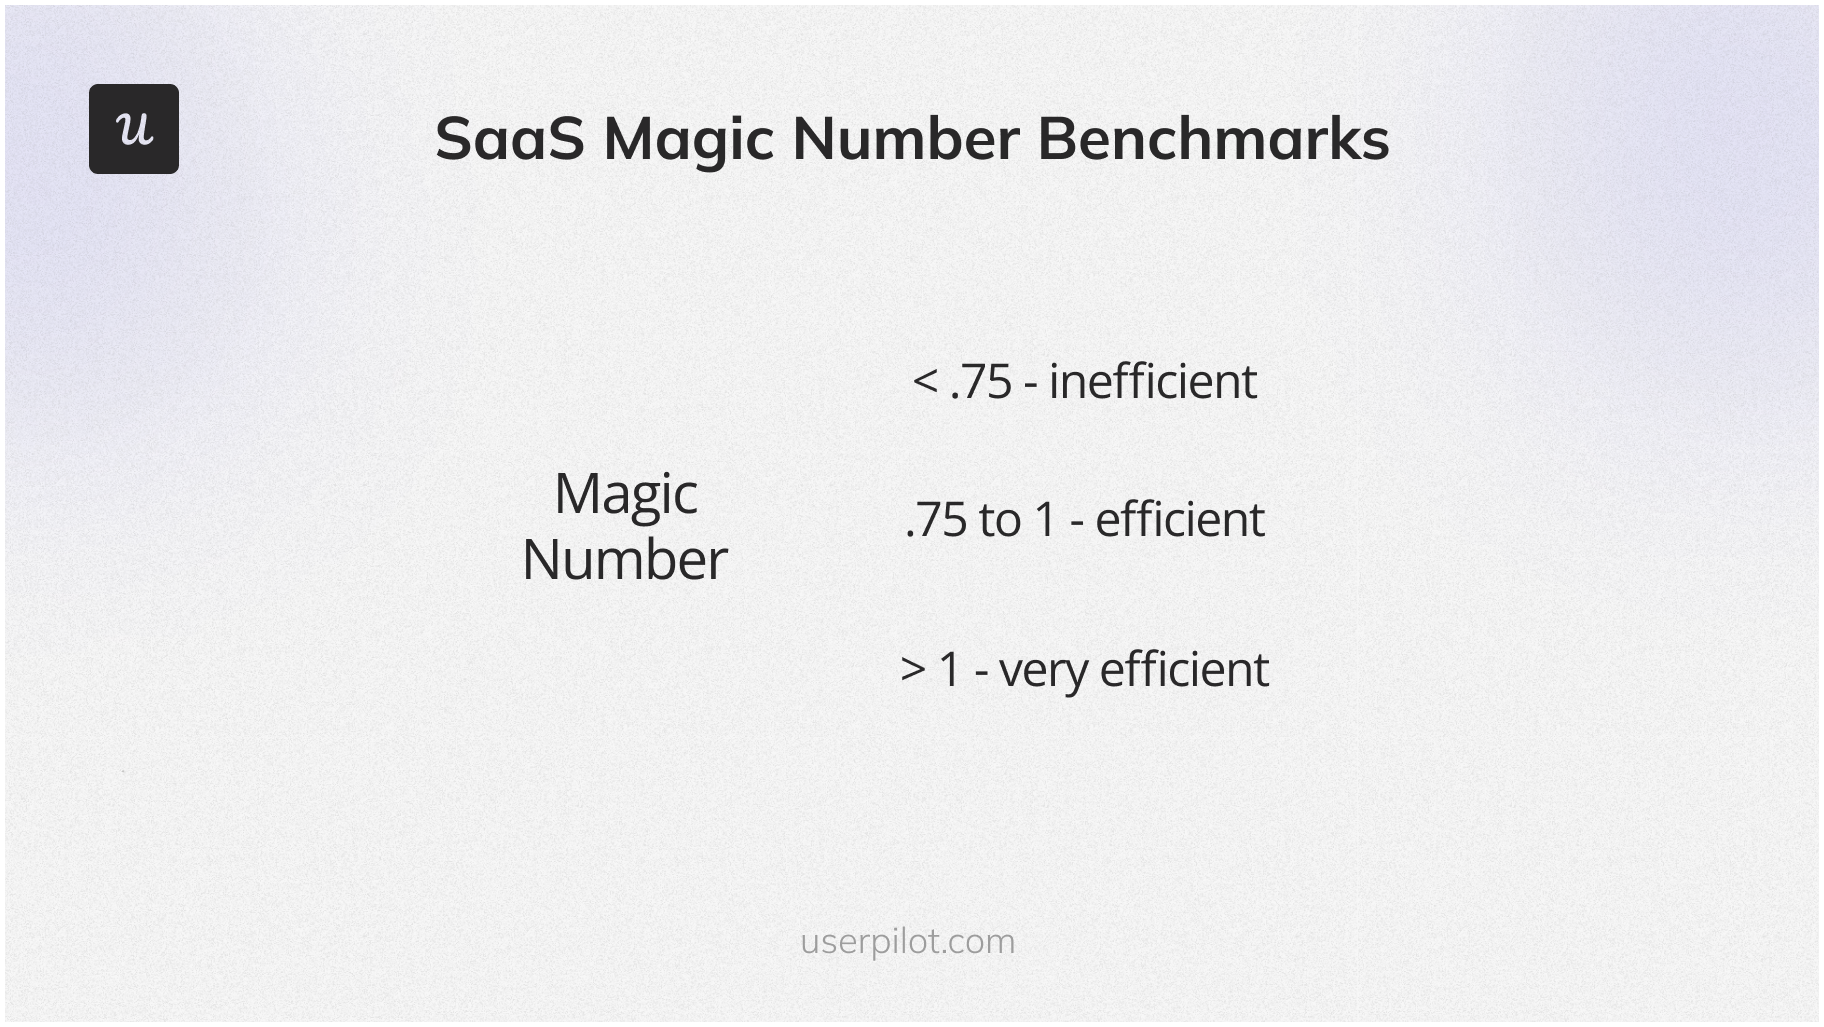 SaaS magic number benchmarks